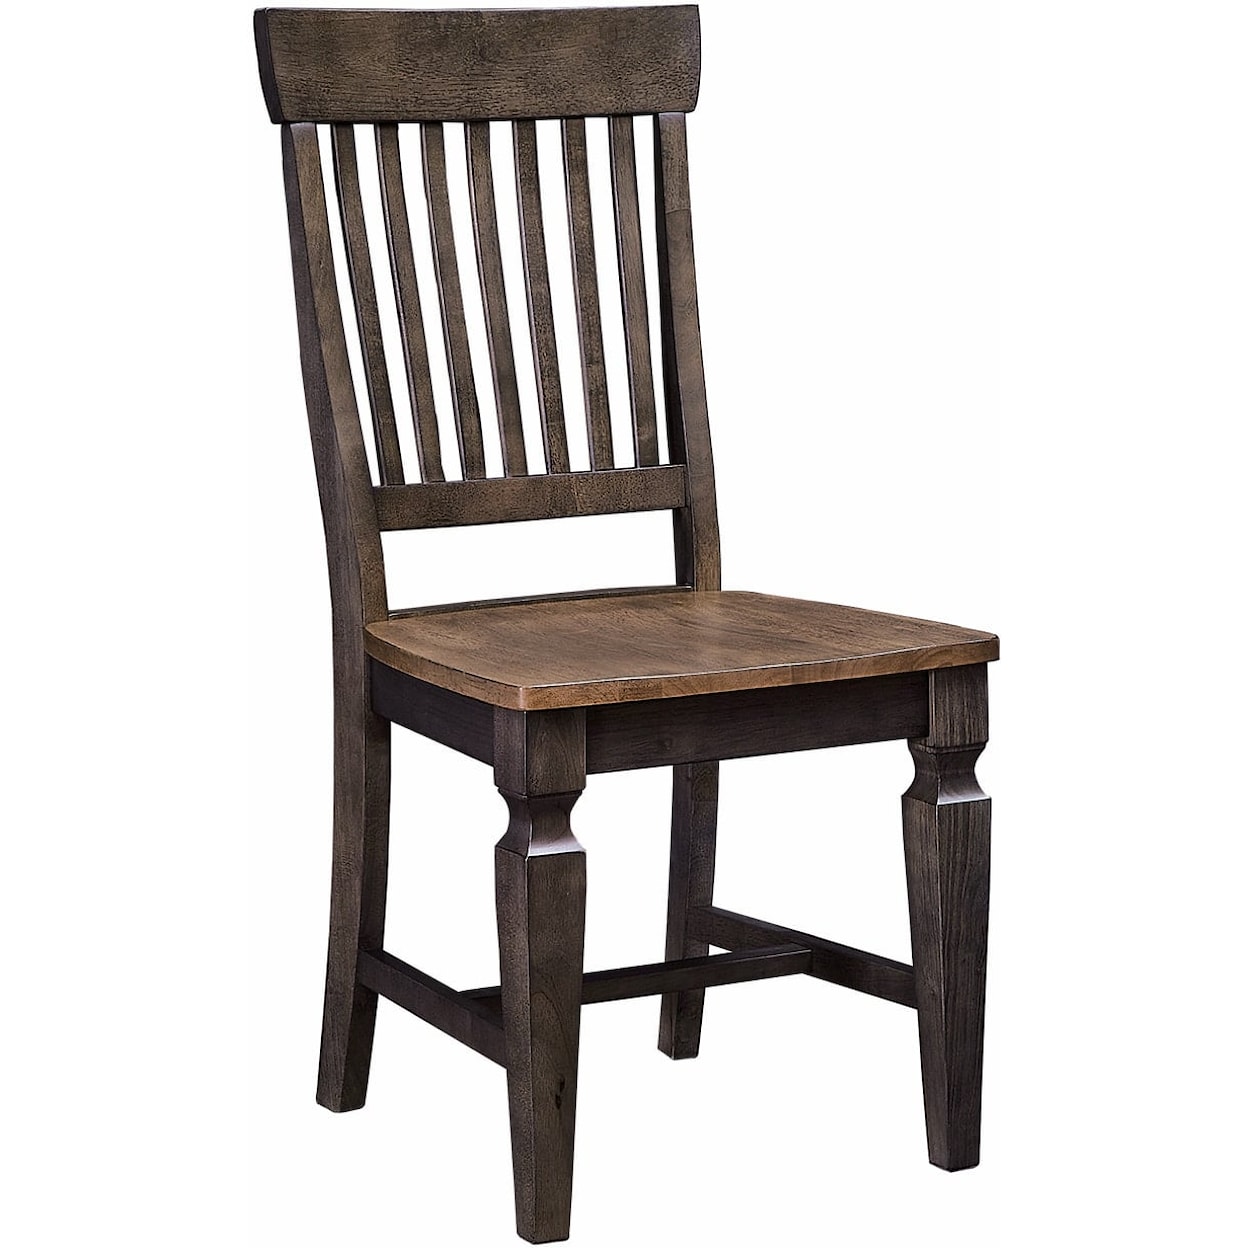 John Thomas Vista Slatback Chair in Hickory & Coal